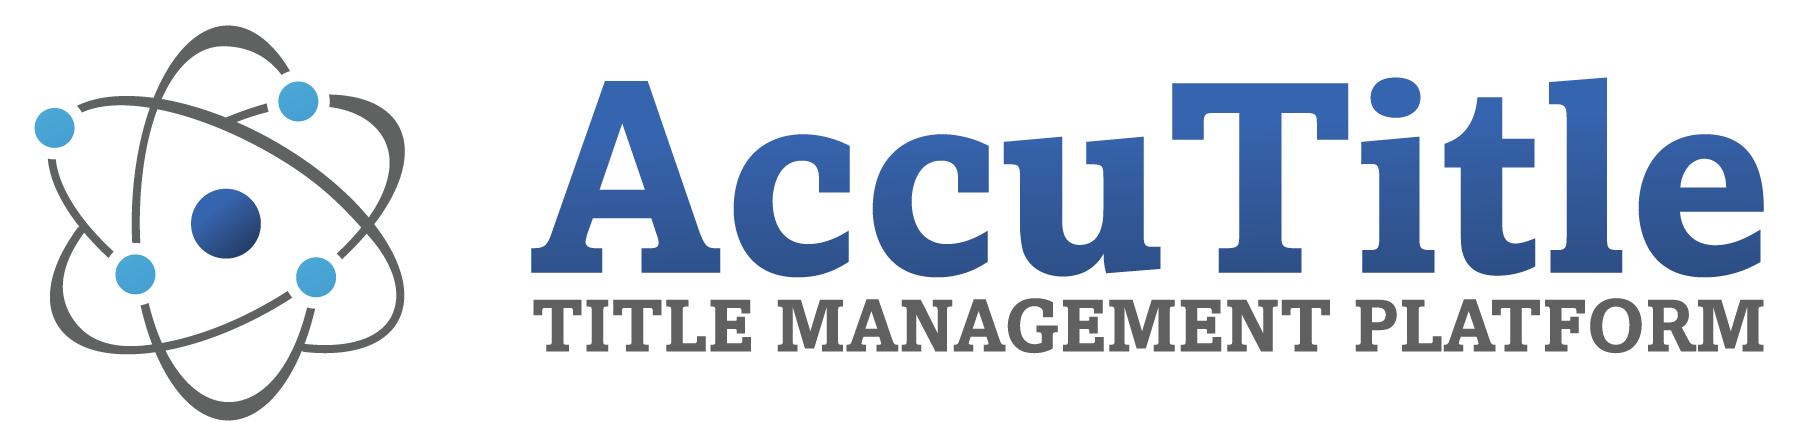 AccuTitle Title Software